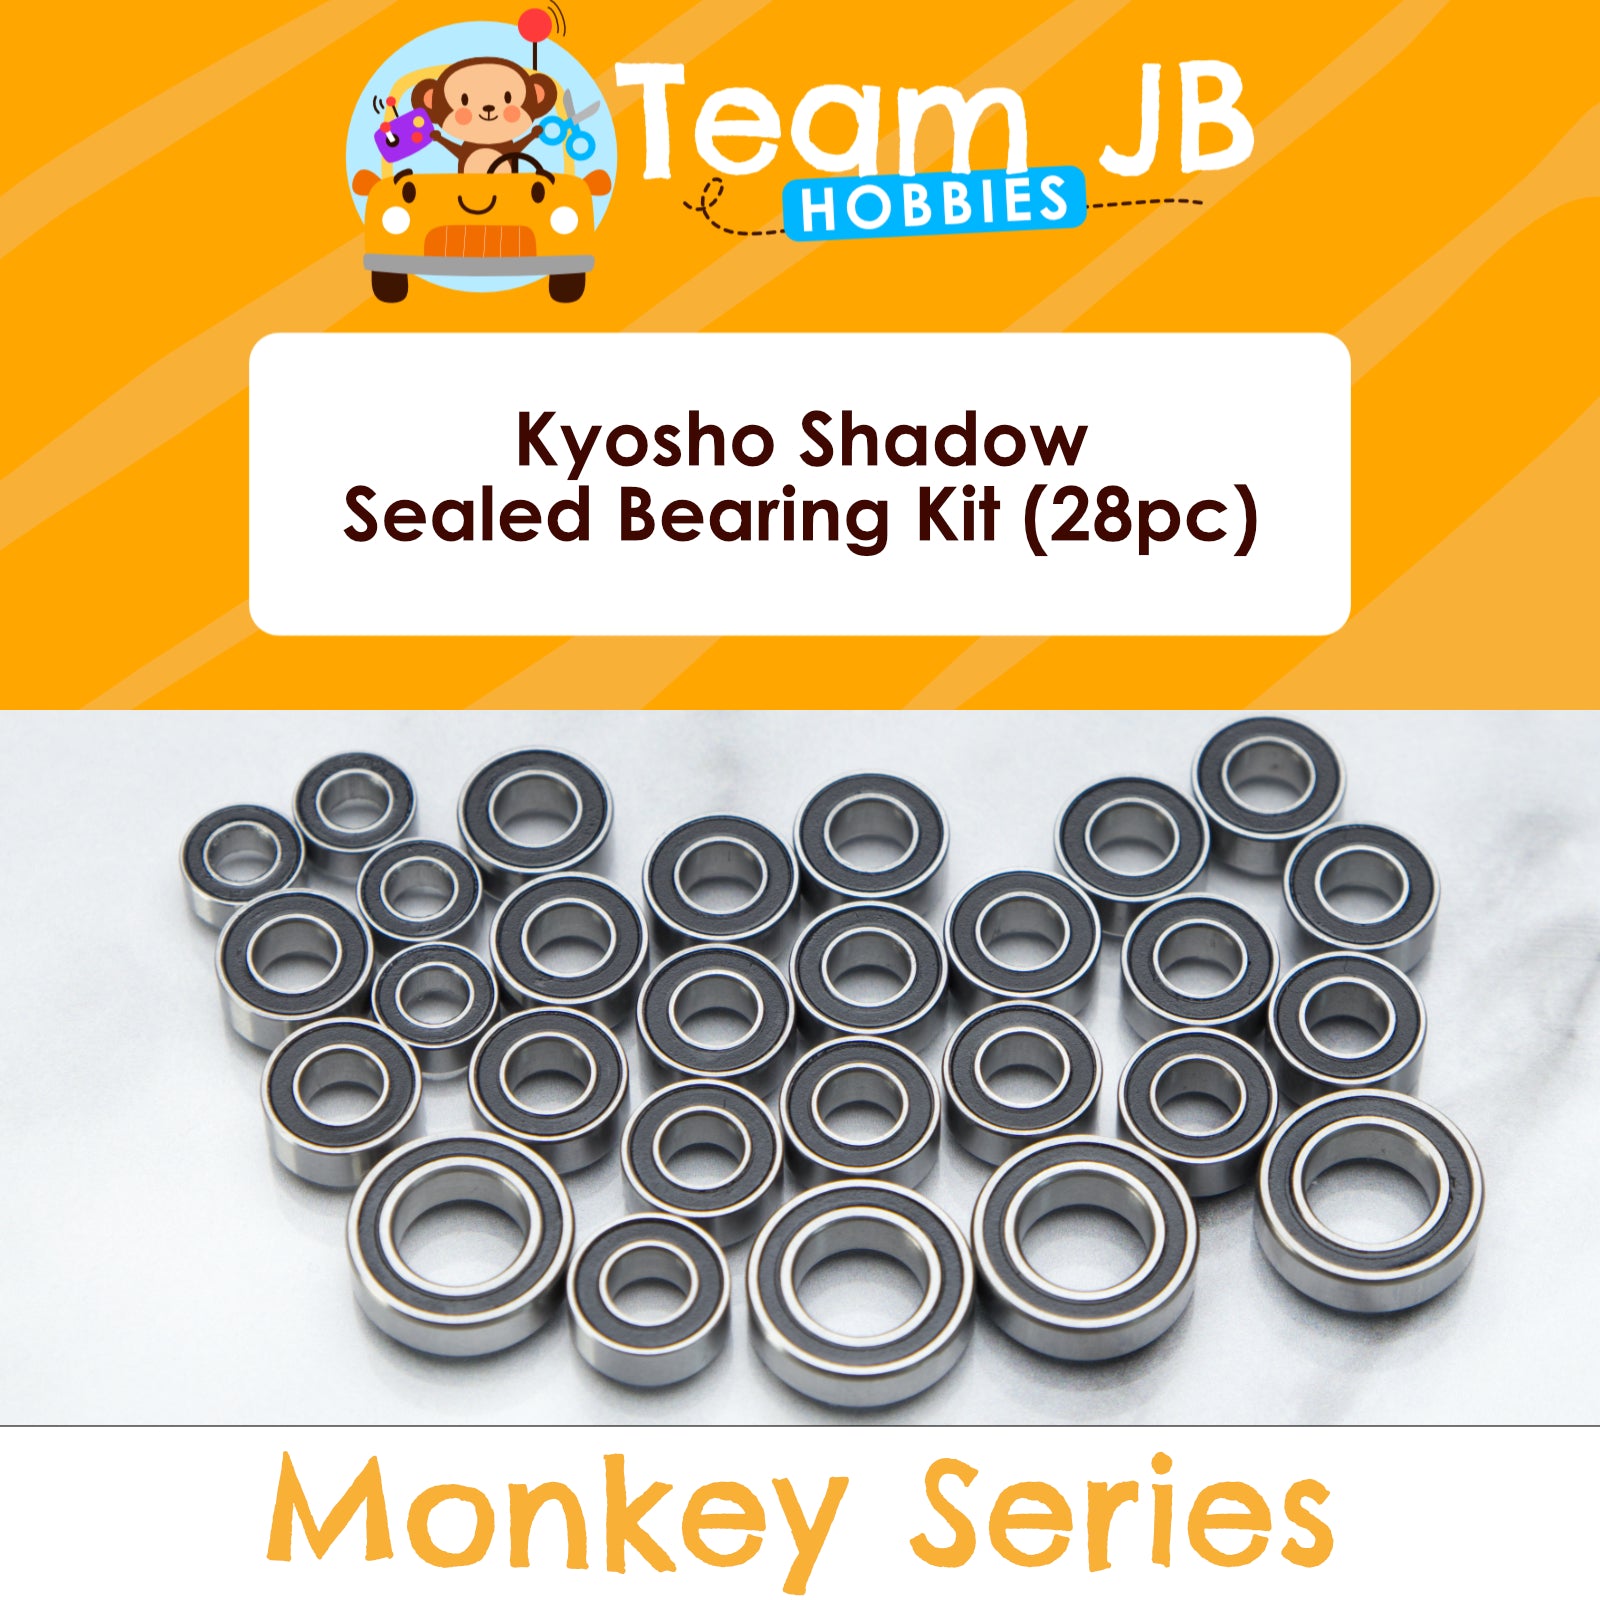 Kyosho Shadow - Sealed Bearing Kit